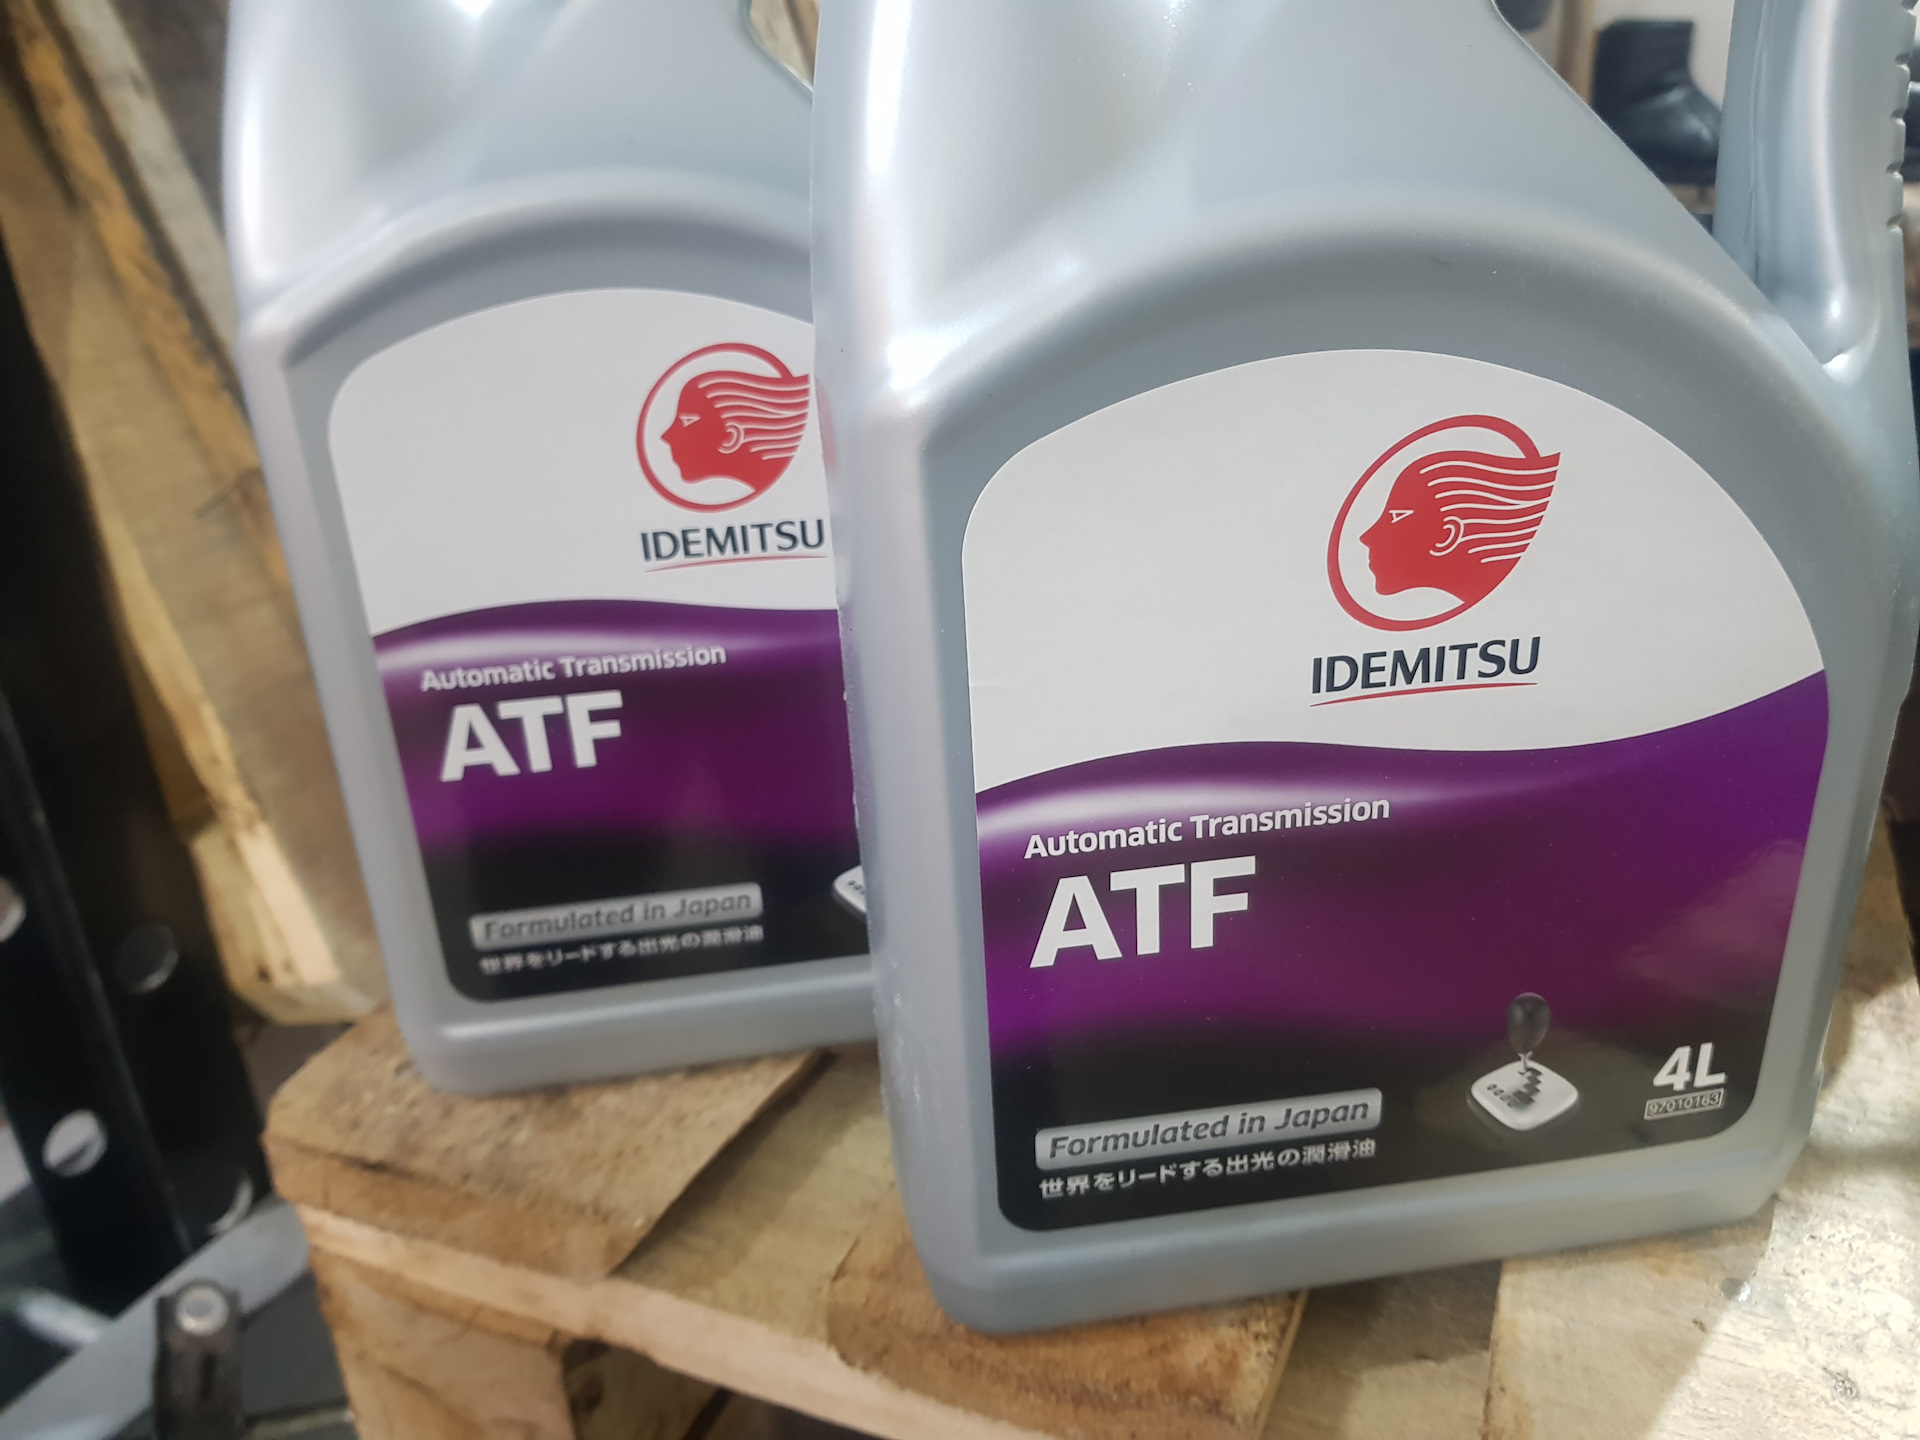 Idemitsu atf купить. Idemitsu ATF sp3. Infiniti g35 масло в АКПП.